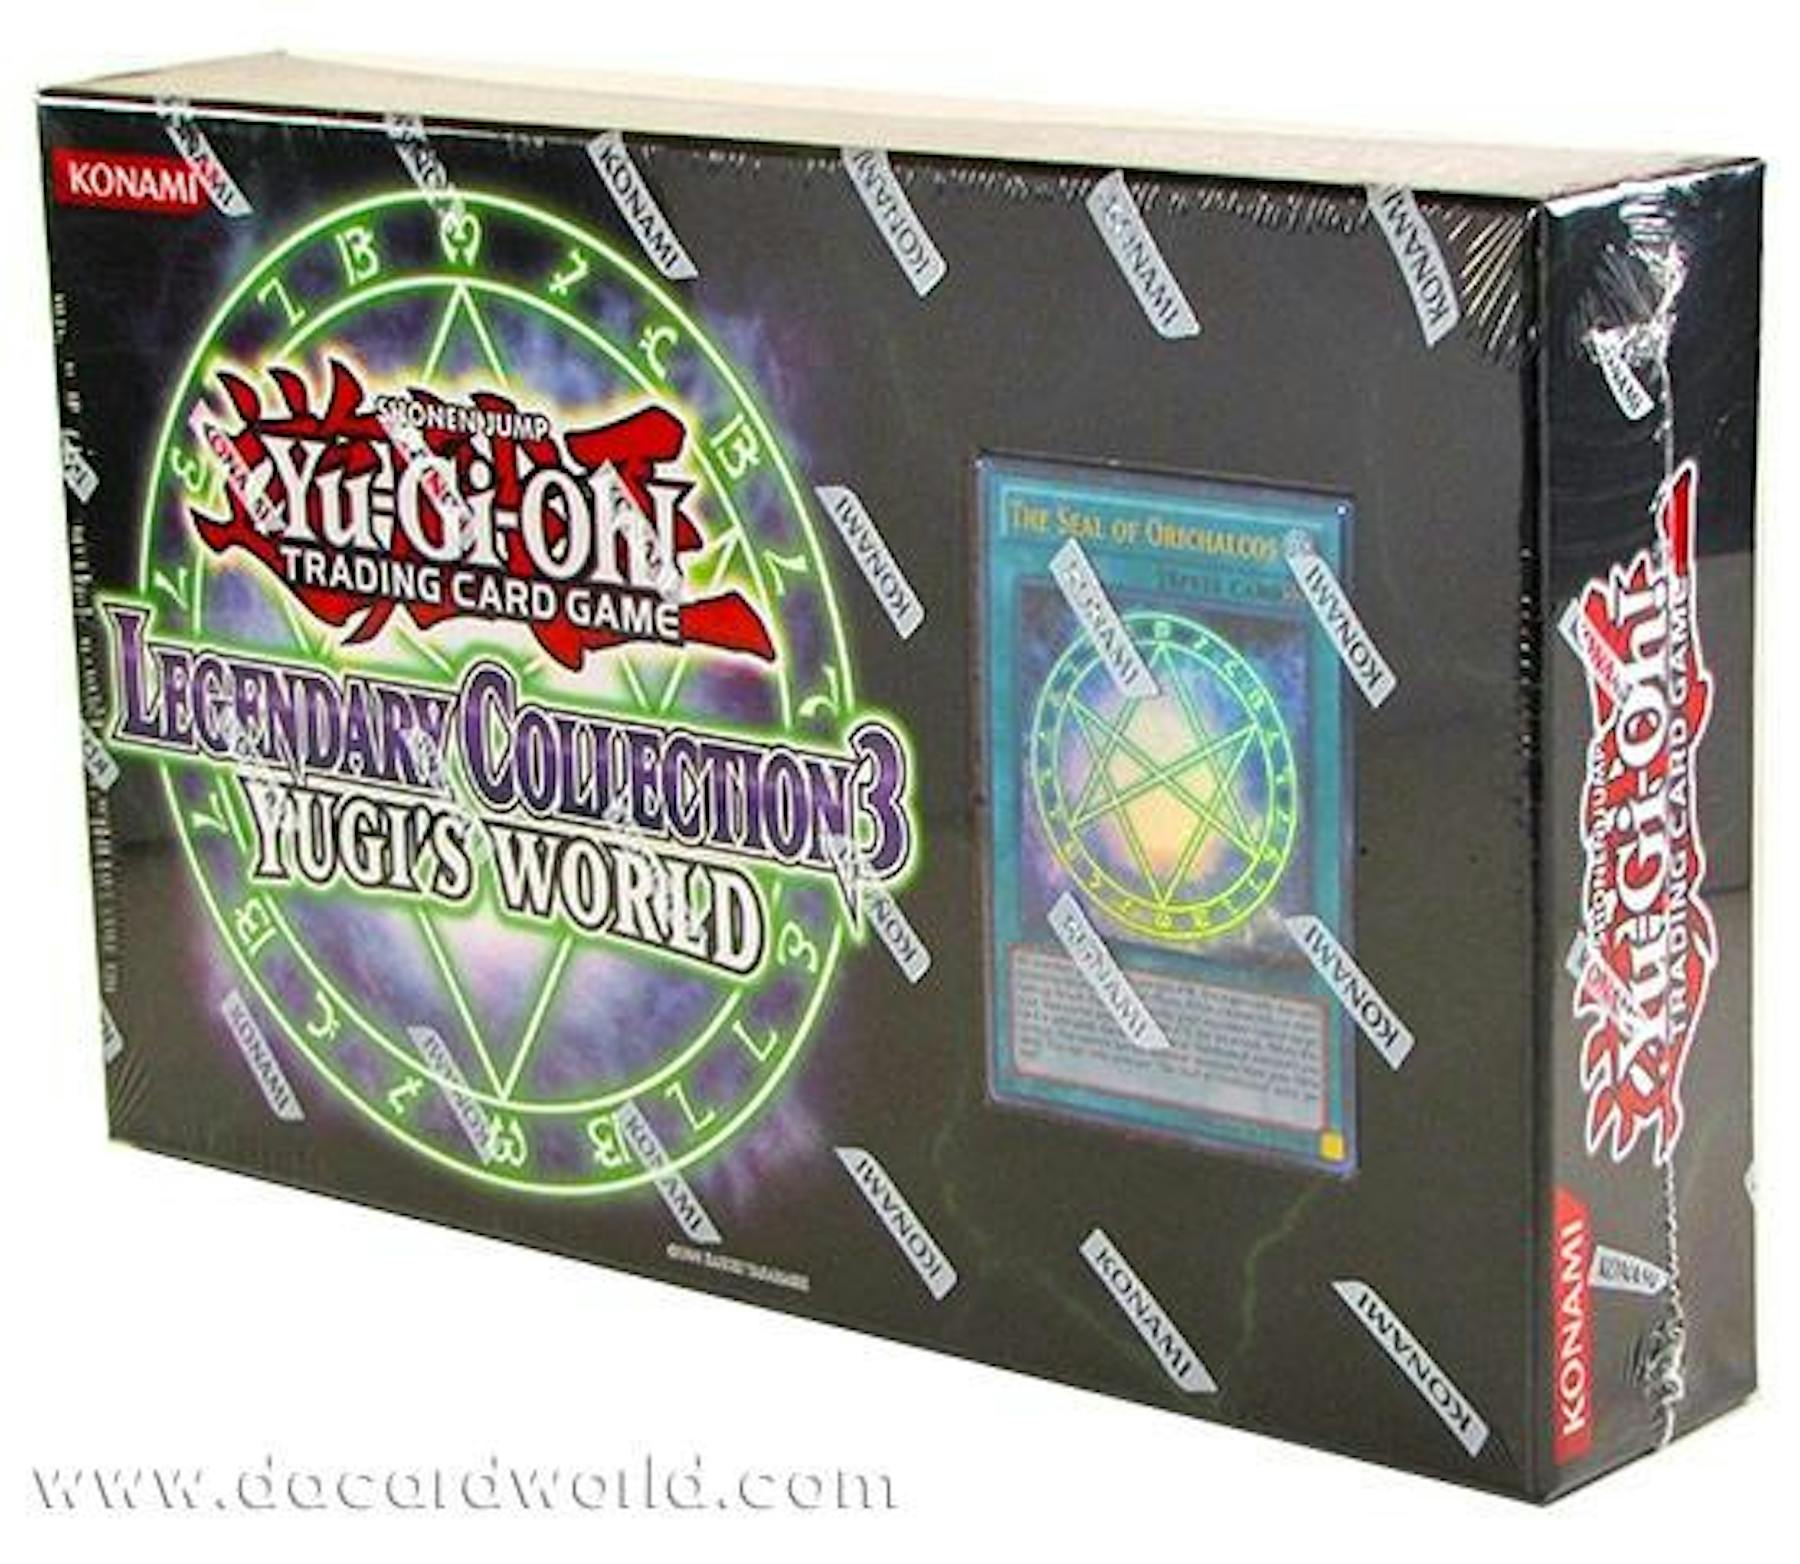 Konami Yu Gi Oh Legendary Collection 3 Yugis World 12 Box Case Da 